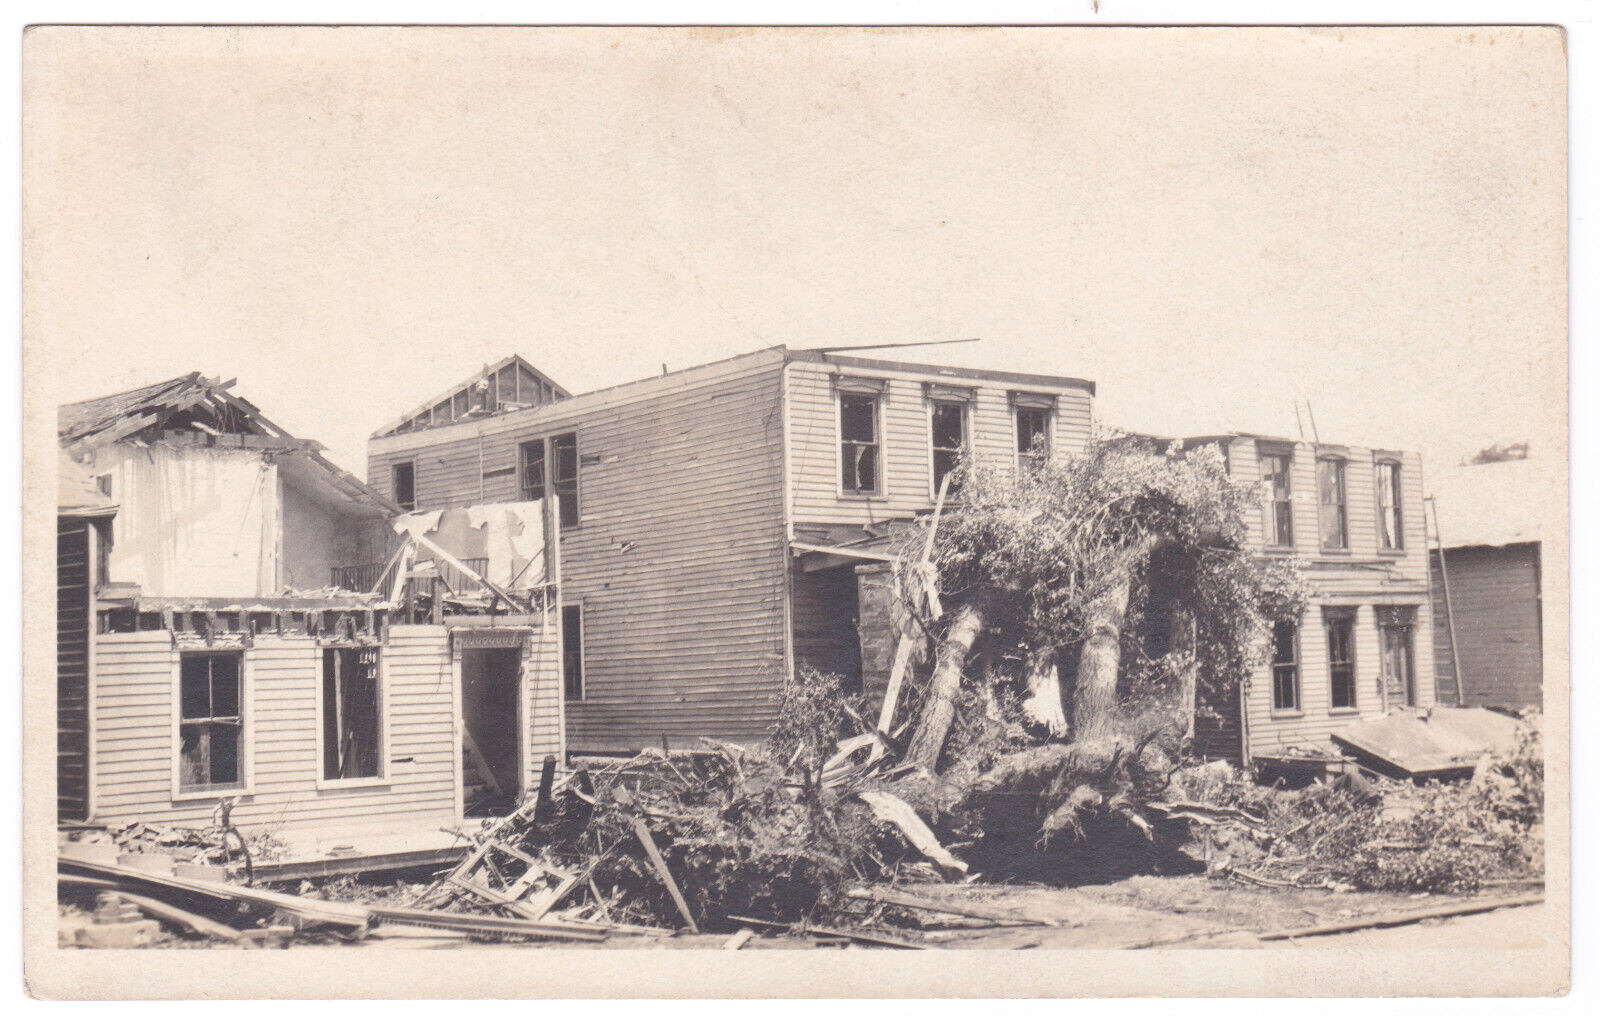 Lorain Ohio Source c. 1924 Tornado Damaged Houses Uprooted Trees Debris RPPC